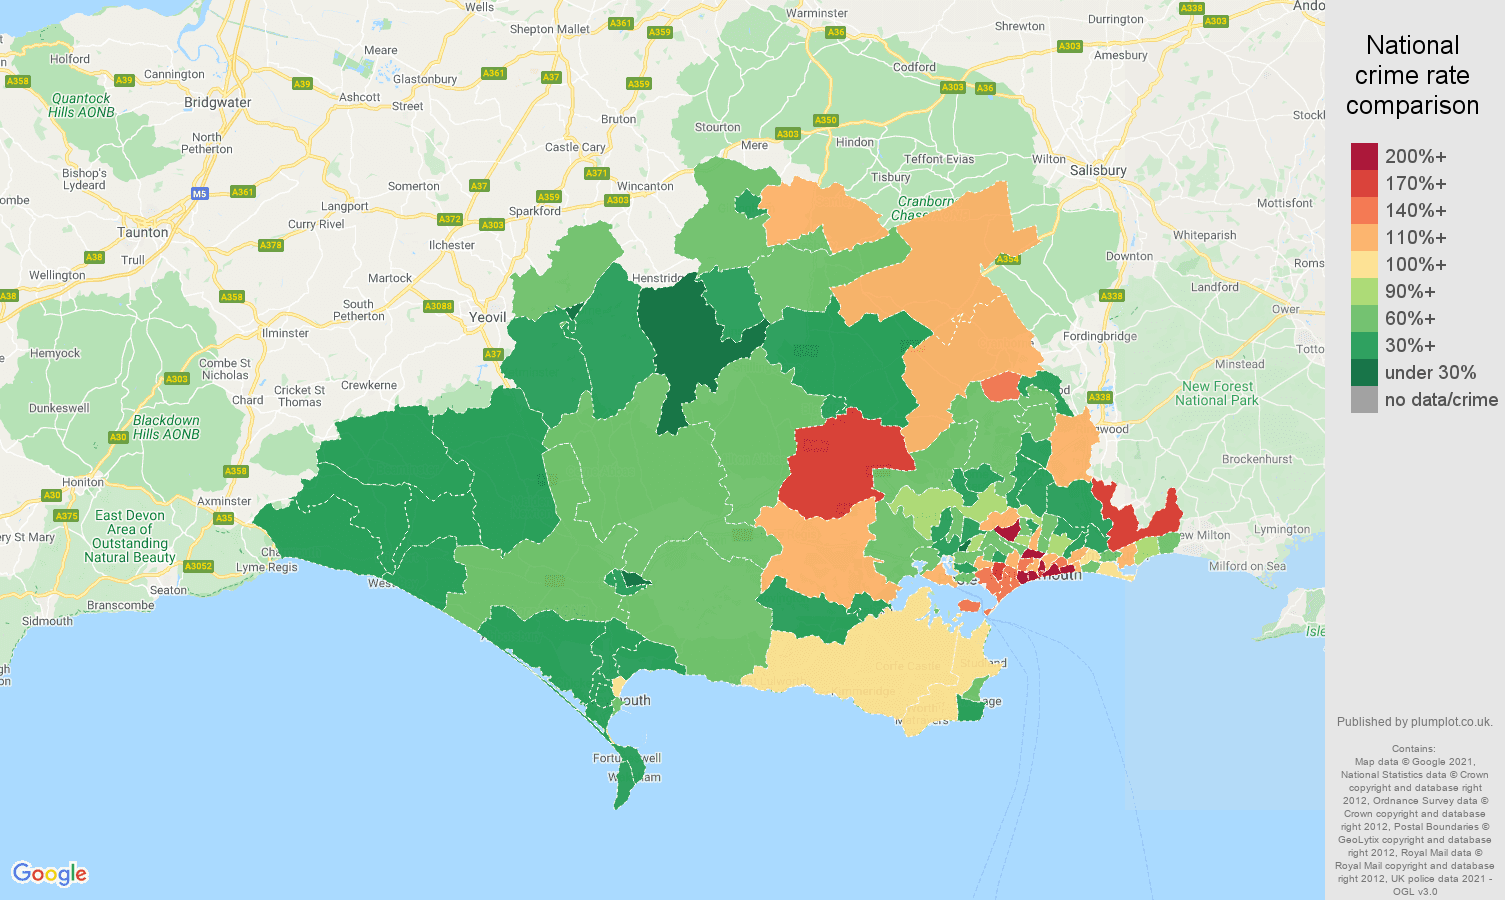 Dorset burglary crime rate comparison map